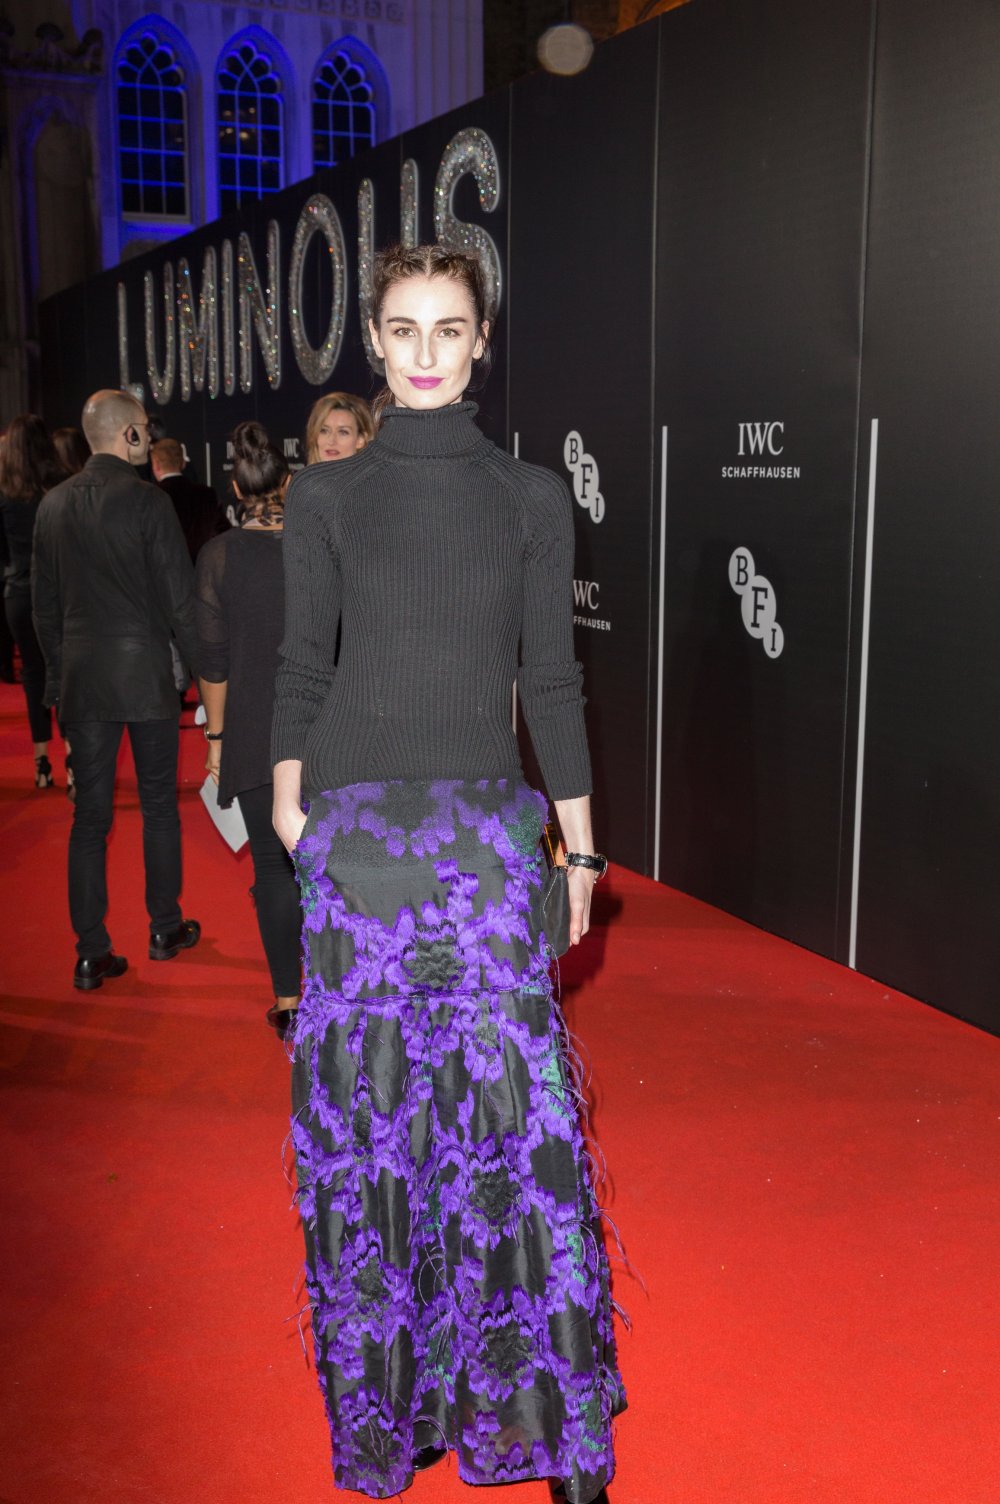 Erin O’Connor attends the BFI LUMINOUS gala 2015